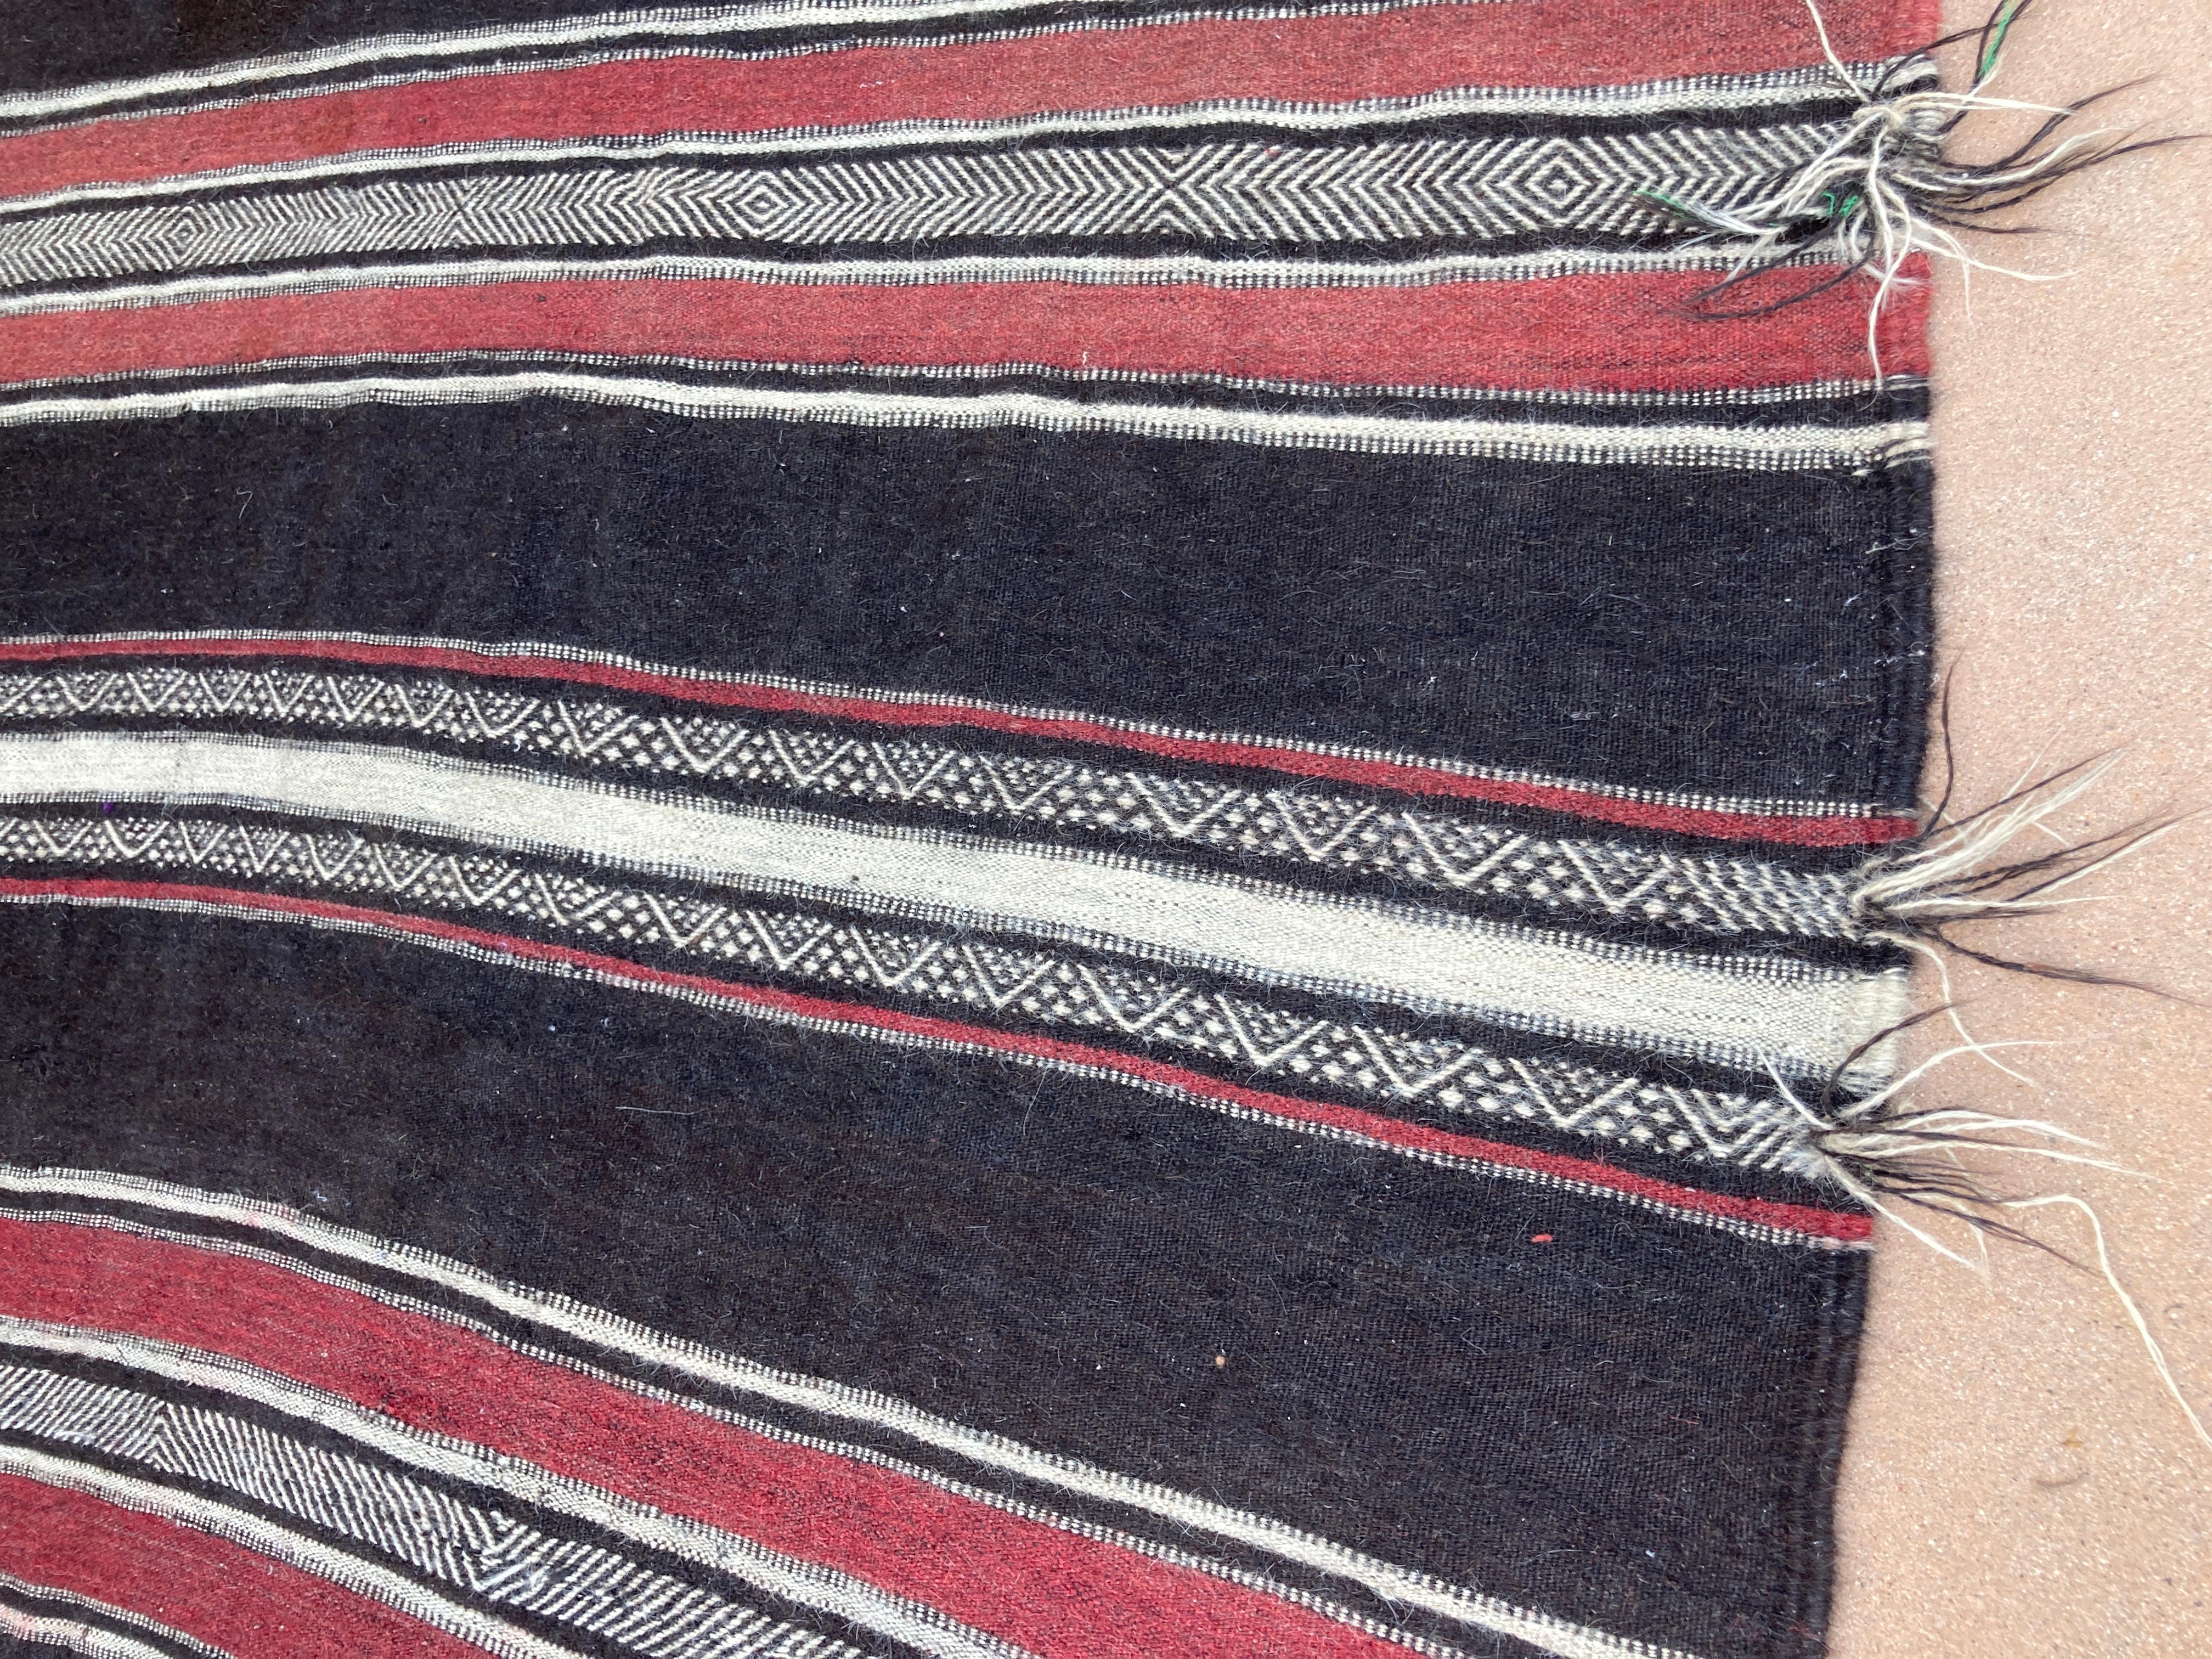 Moroccan Vintage Flat-Weave Black Camel Hair Tribal Rug For Sale 1